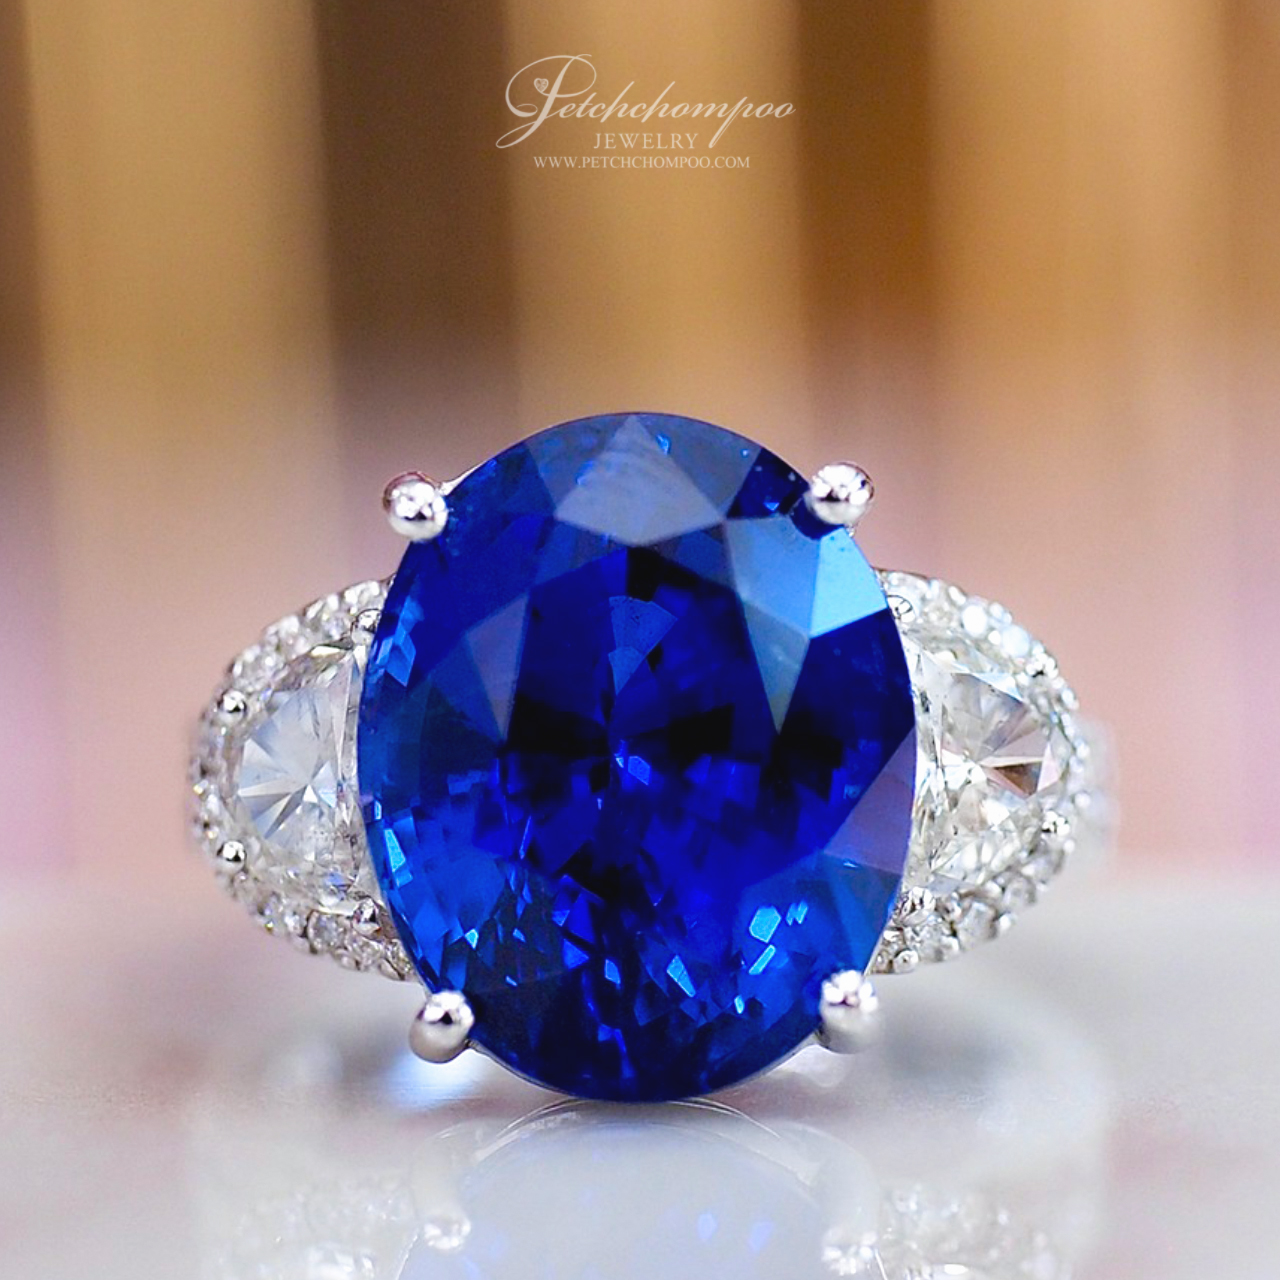 [022134] 13 Carat Royal Blue Ceylon Sapphire Ring Discount 2,590,000